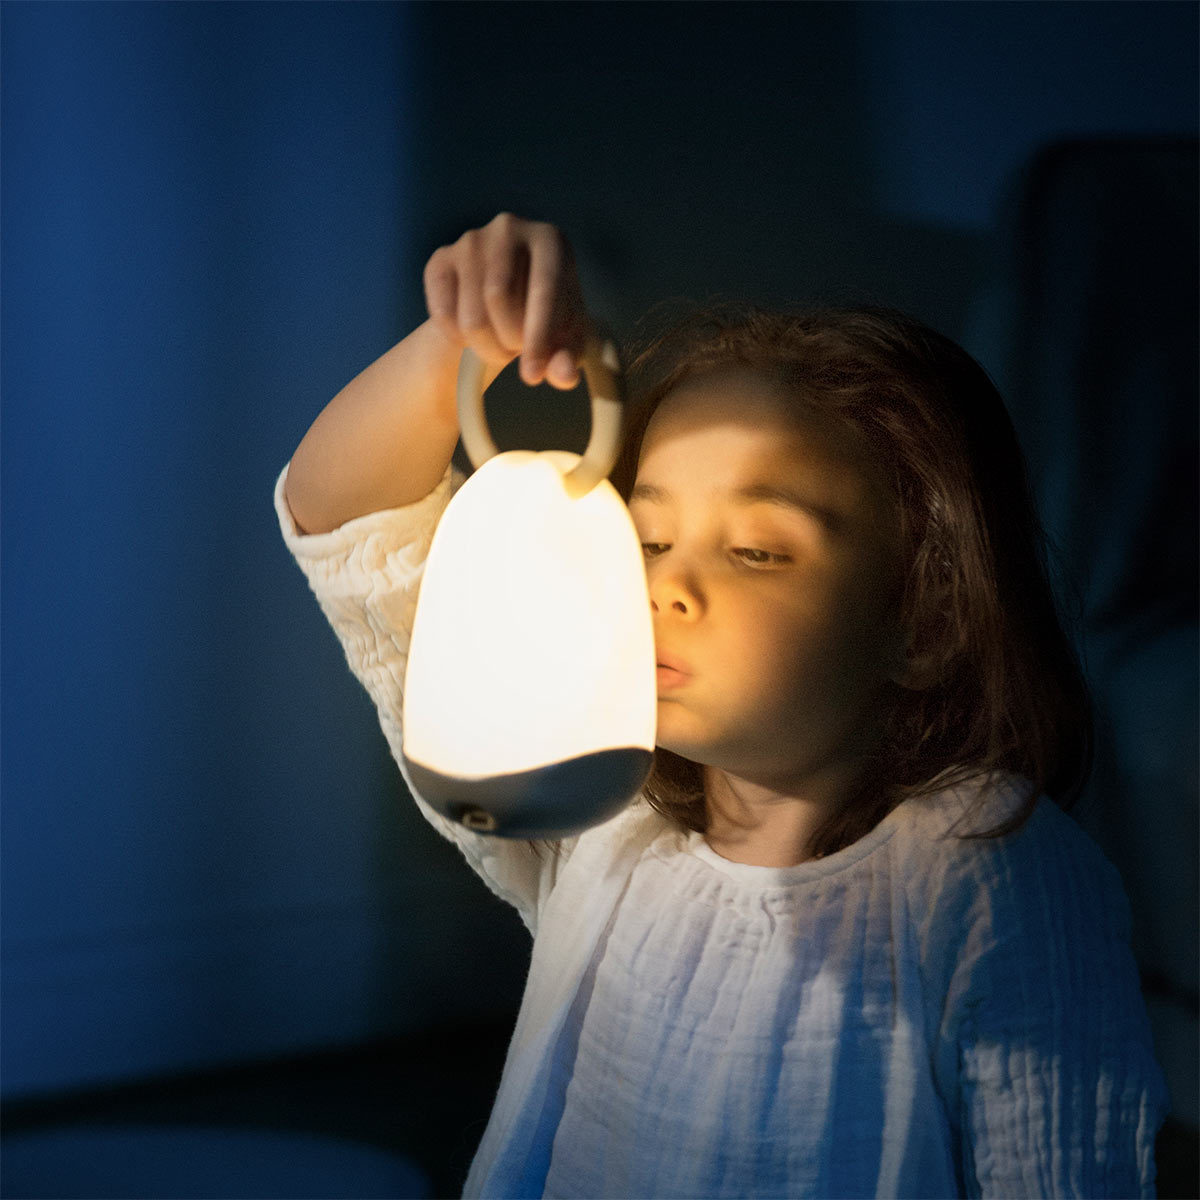 Pabobo Lantern Night Light With Magic Blow Control  PB1300  (0+ Months)